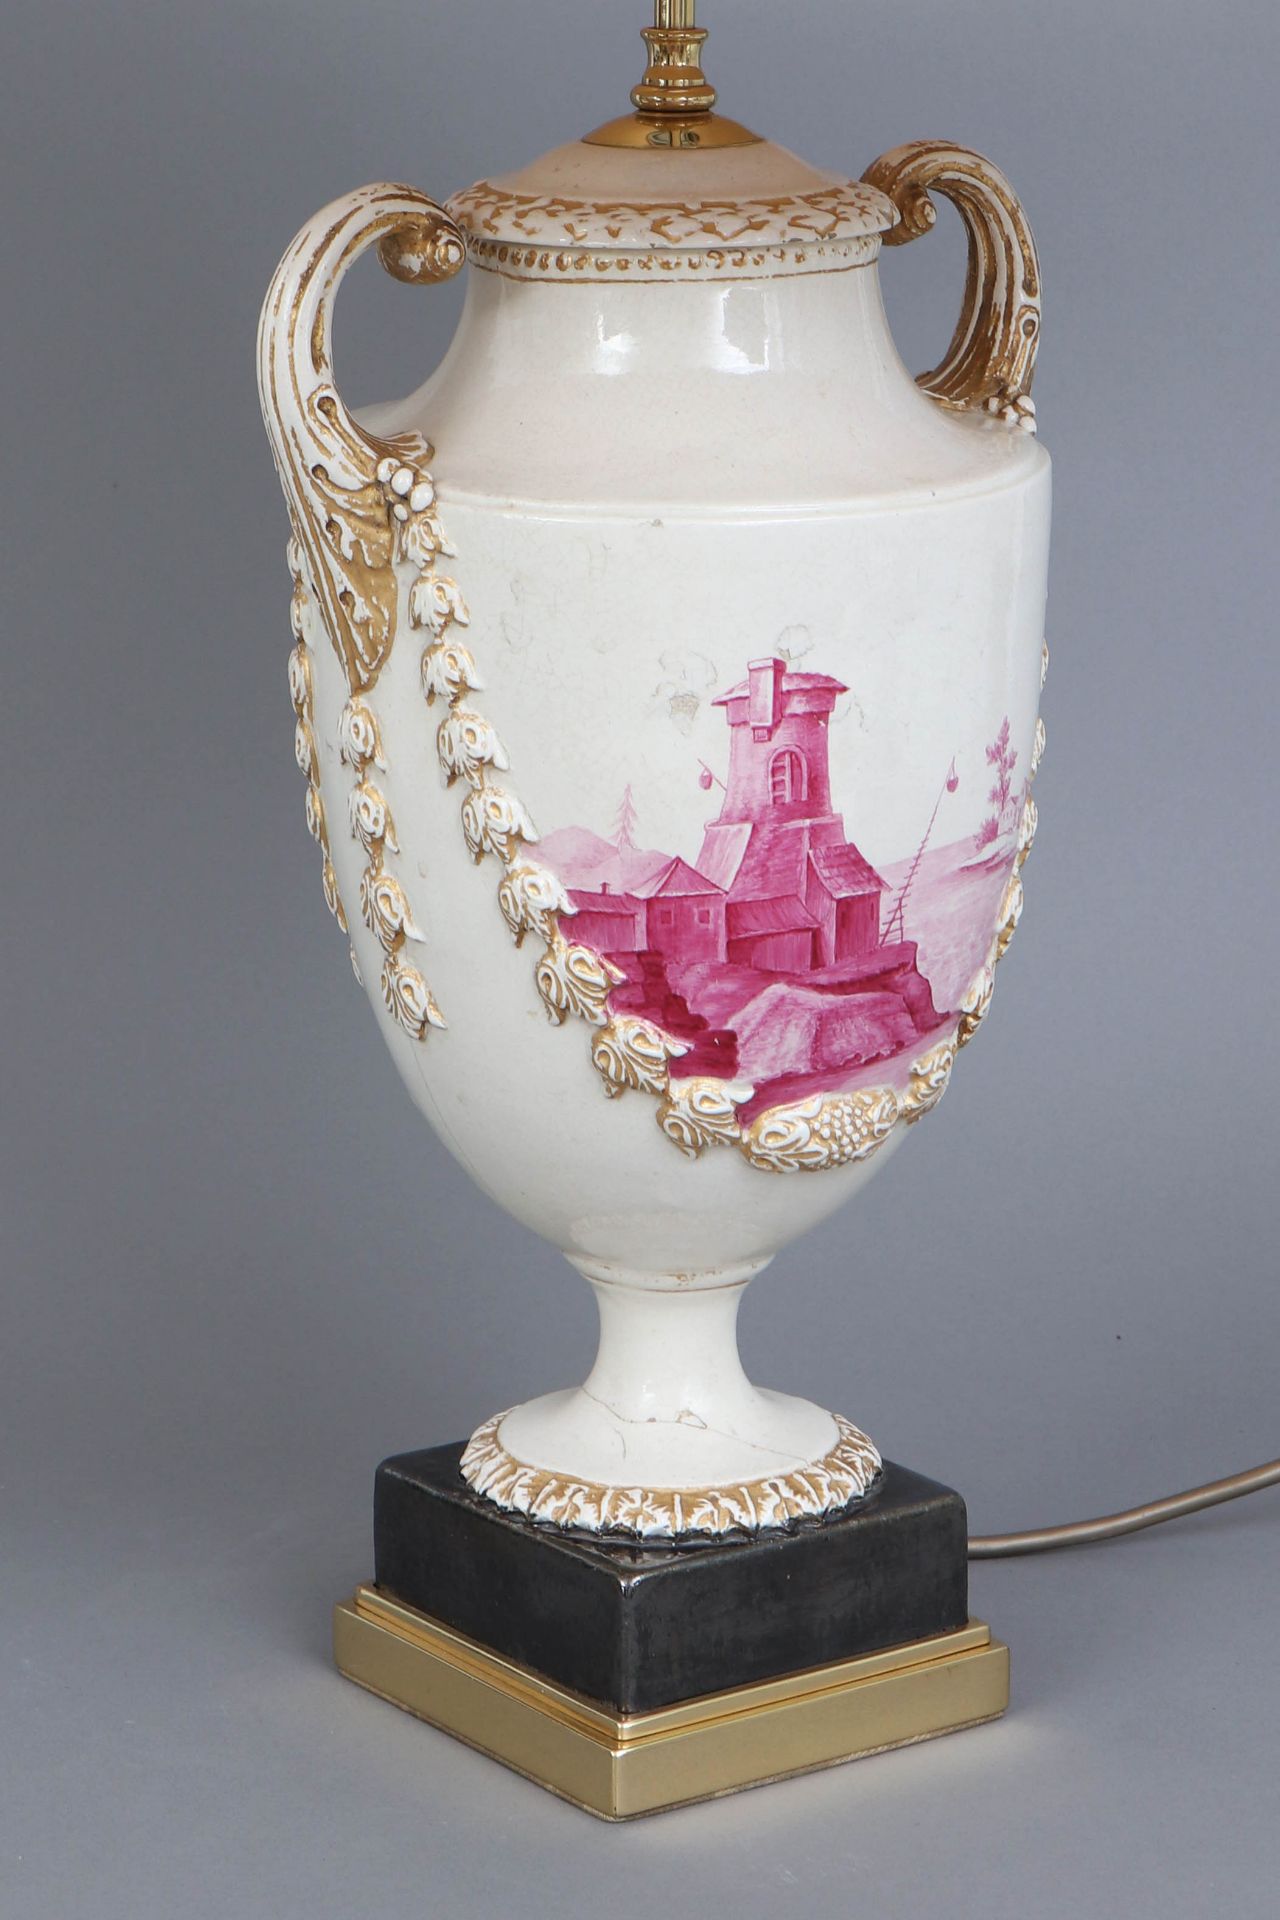 Tischlampe mit Fuß in Form einer Keramik Henkelamphore - Image 2 of 3